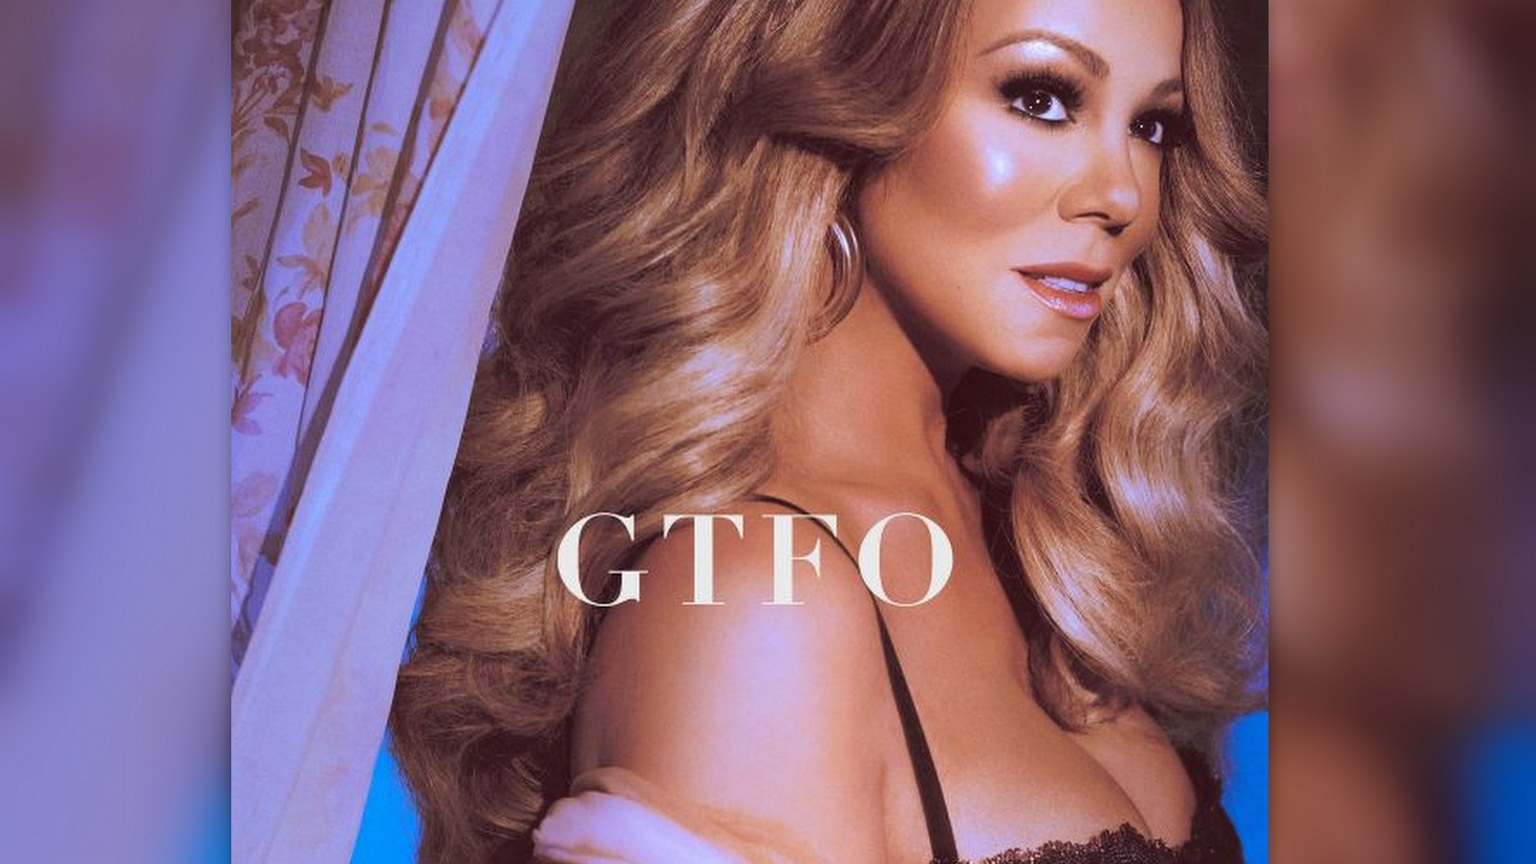 She’s Back! Listen to Mariah Carey’s Brand New Single – ‘GTFO’